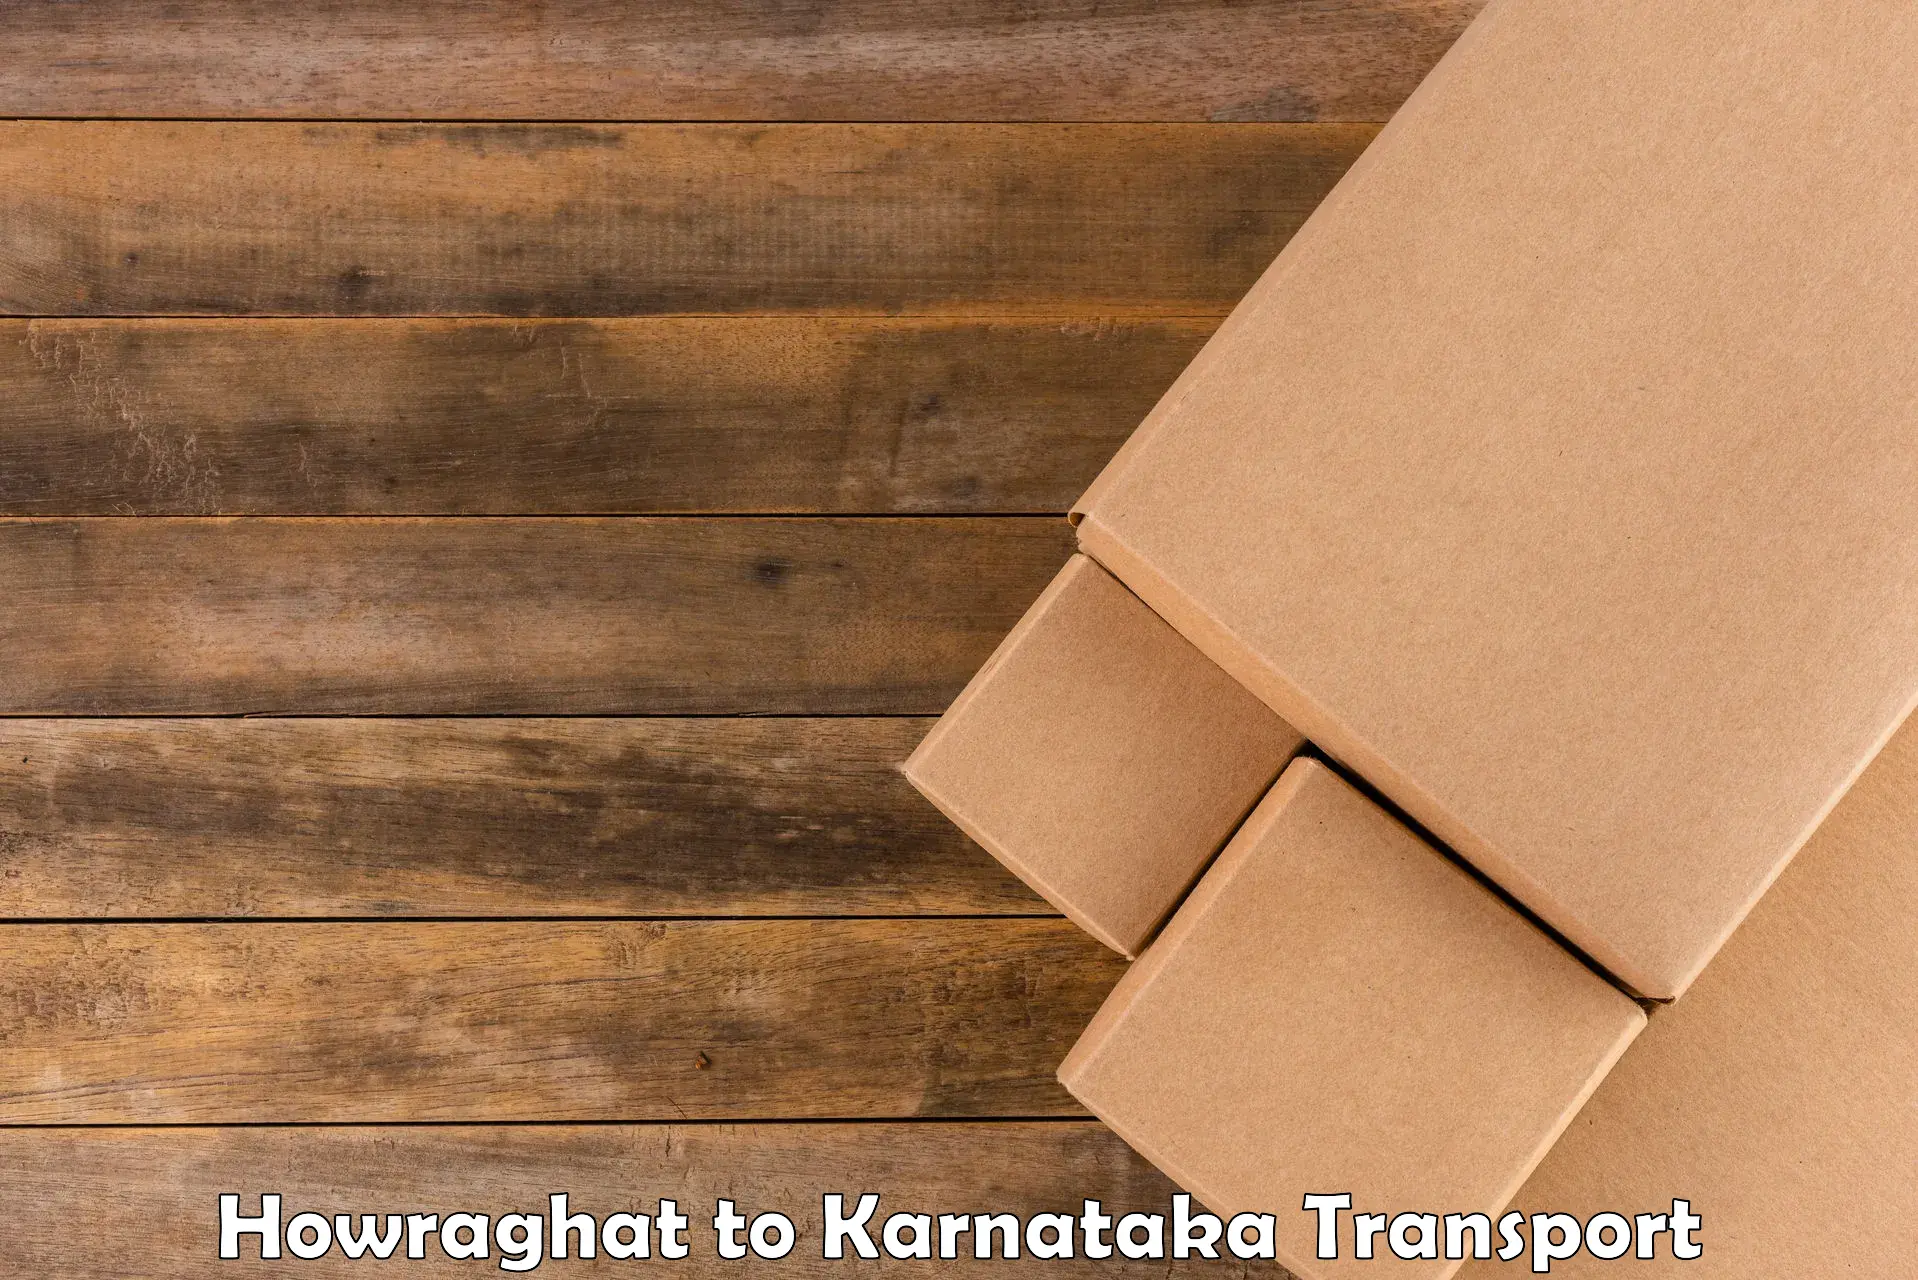 Pick up transport service Howraghat to Koppal